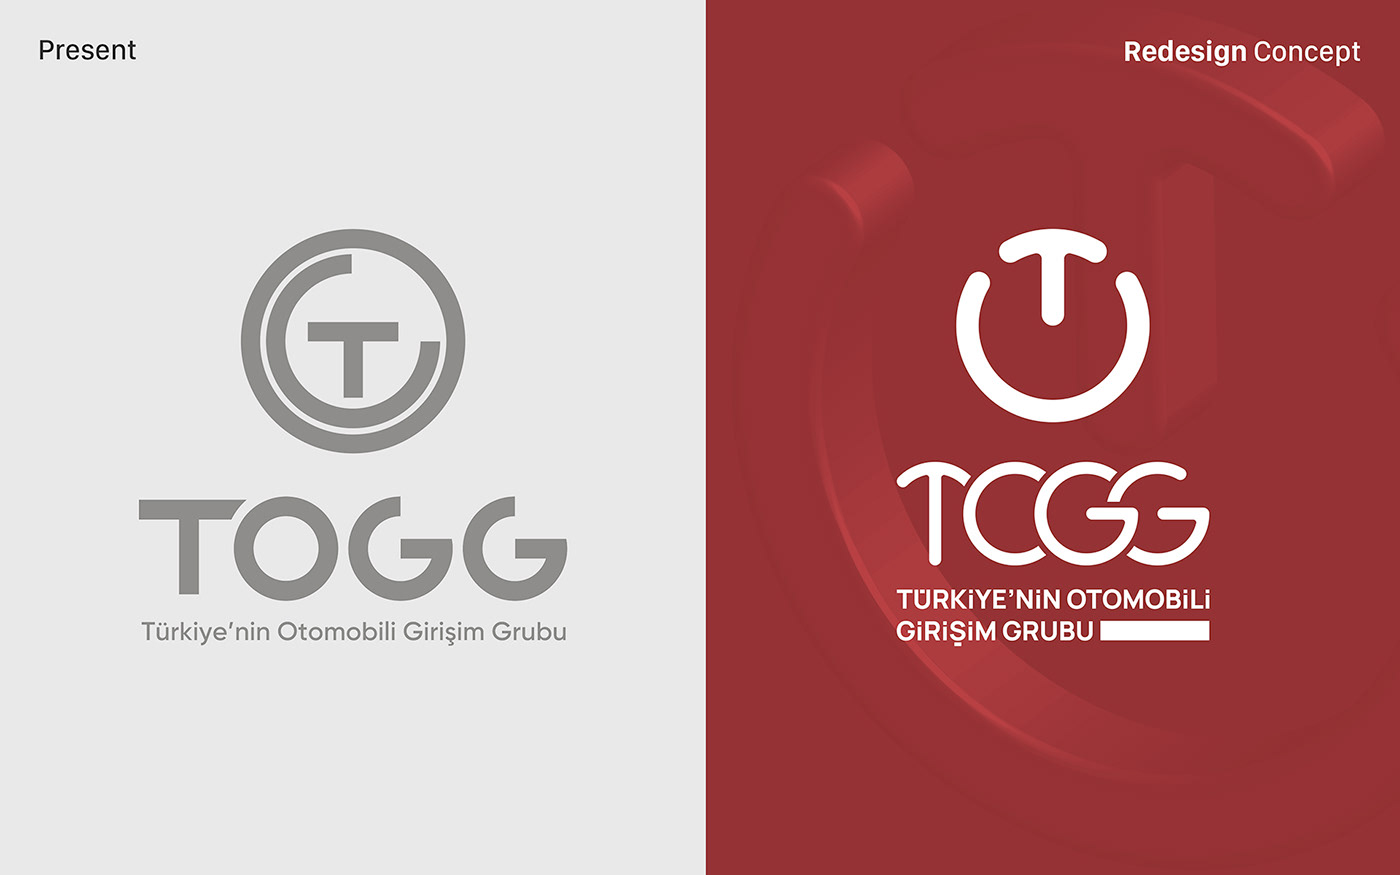 Togg car automobile brand redesign rebranding logo imagery salesman Logotype Turkey